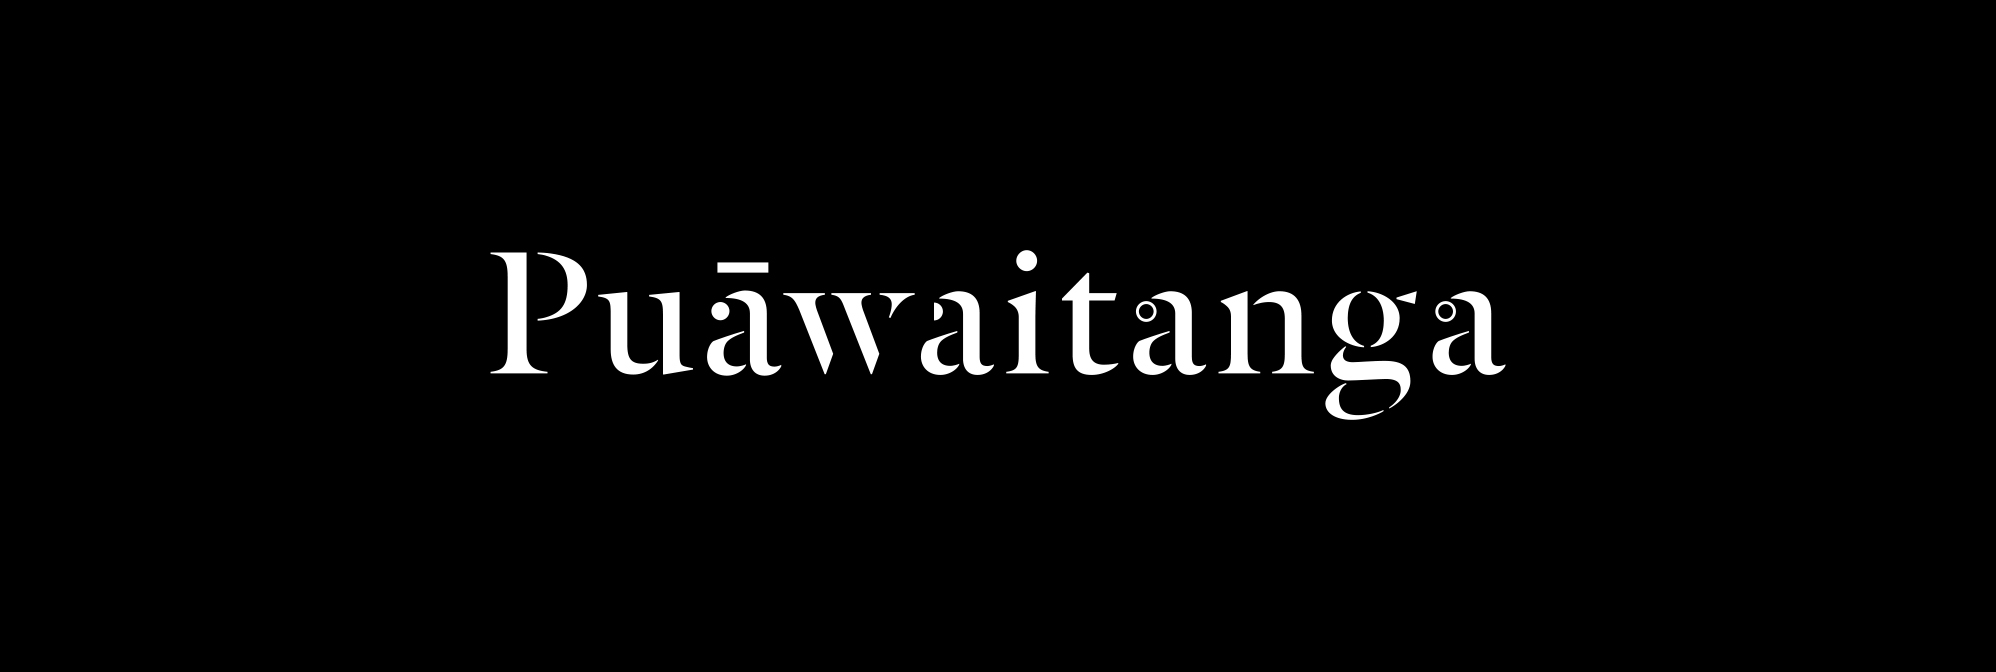 Puawaitanga project image